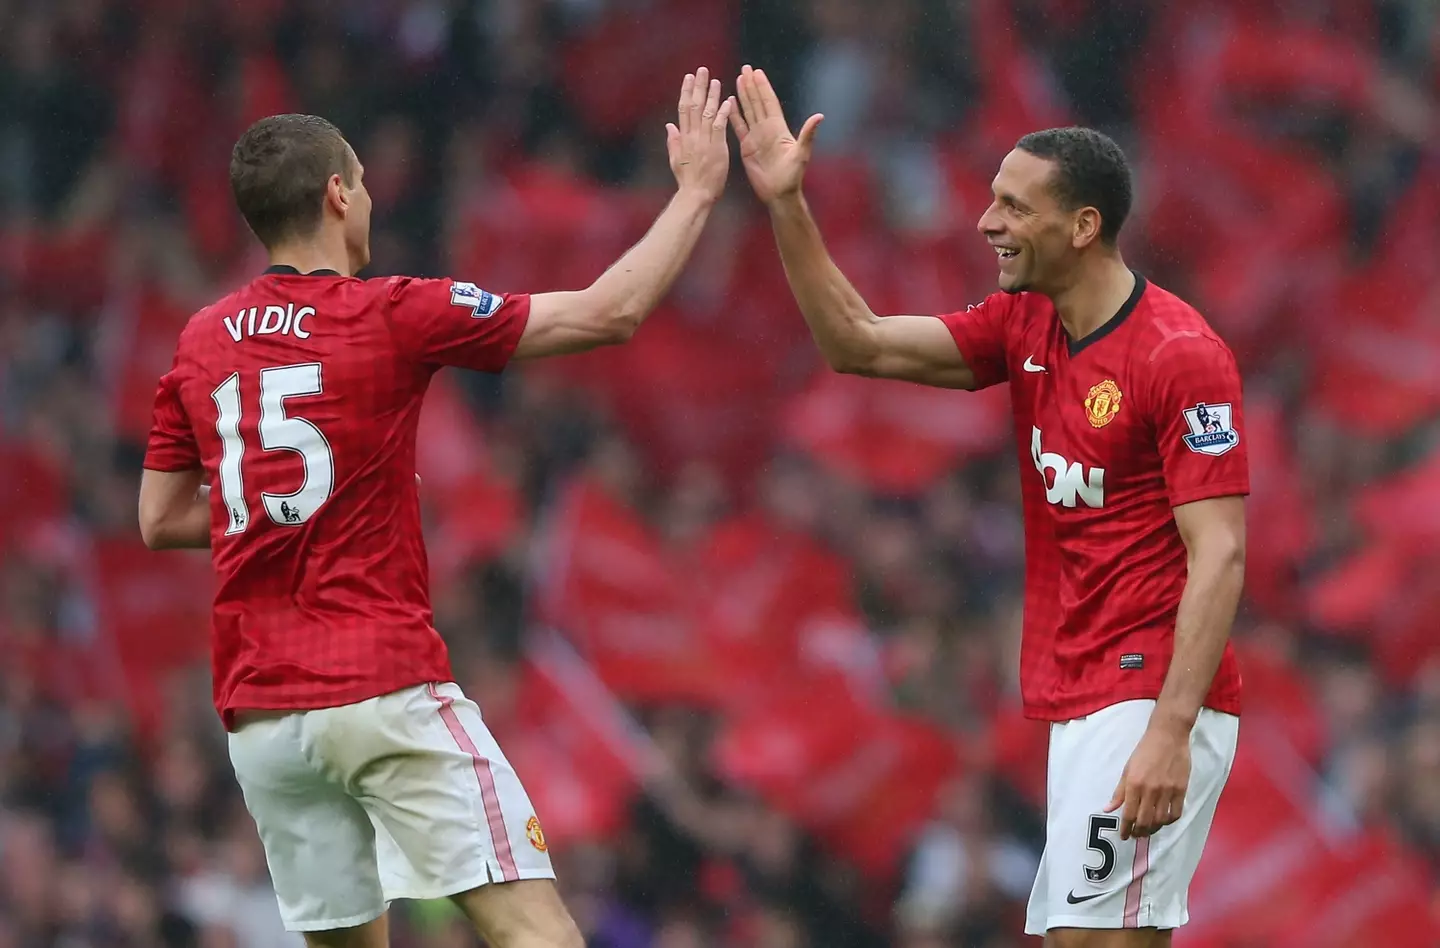 Nemanja Vidic and Rio Ferdinand celebrate a goal for Manchester United. Image: Getty 